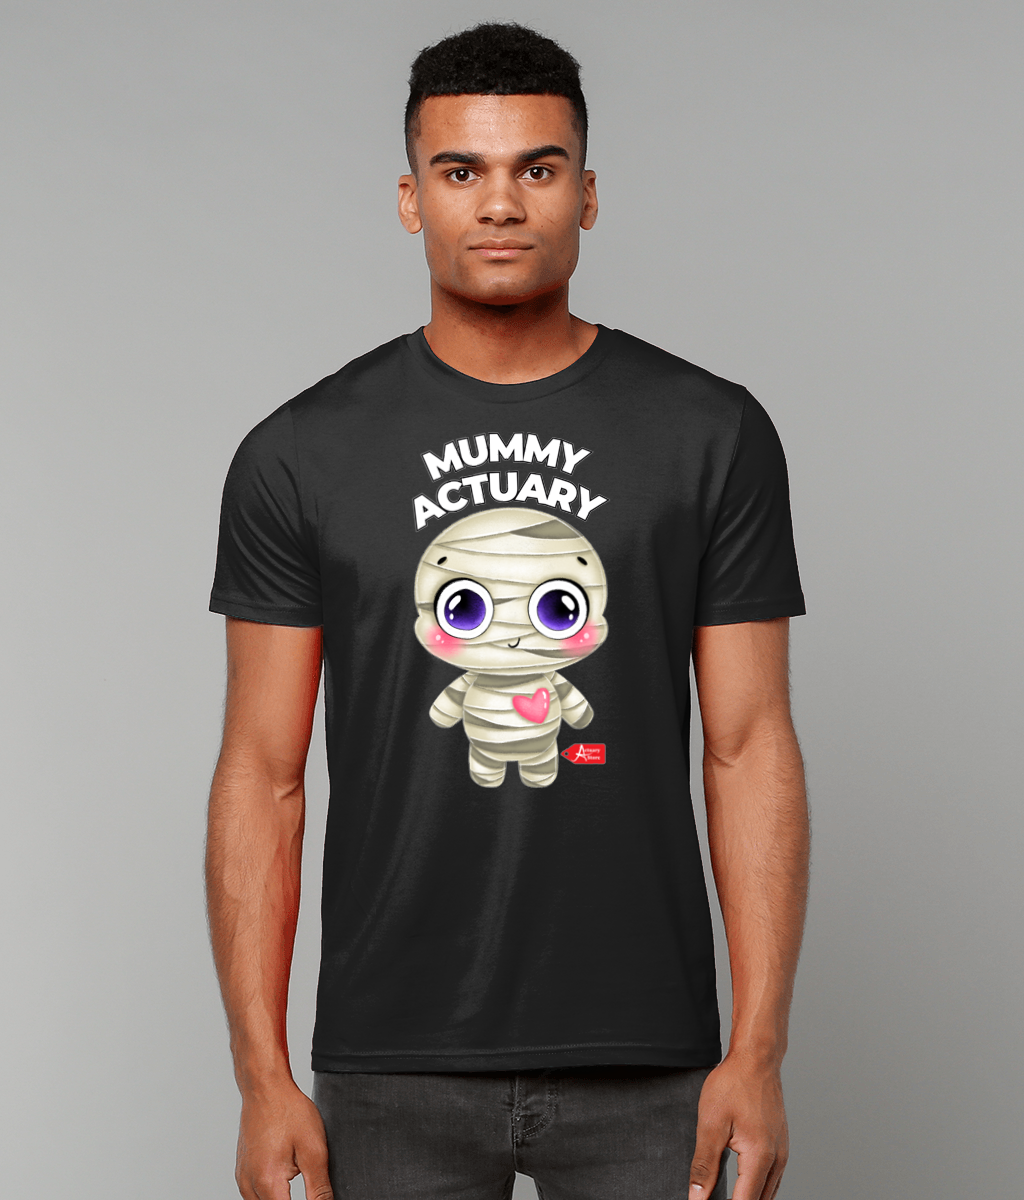 Mummy Actuary Cute (Black, Grey, Pink, White Variants) T-shirt